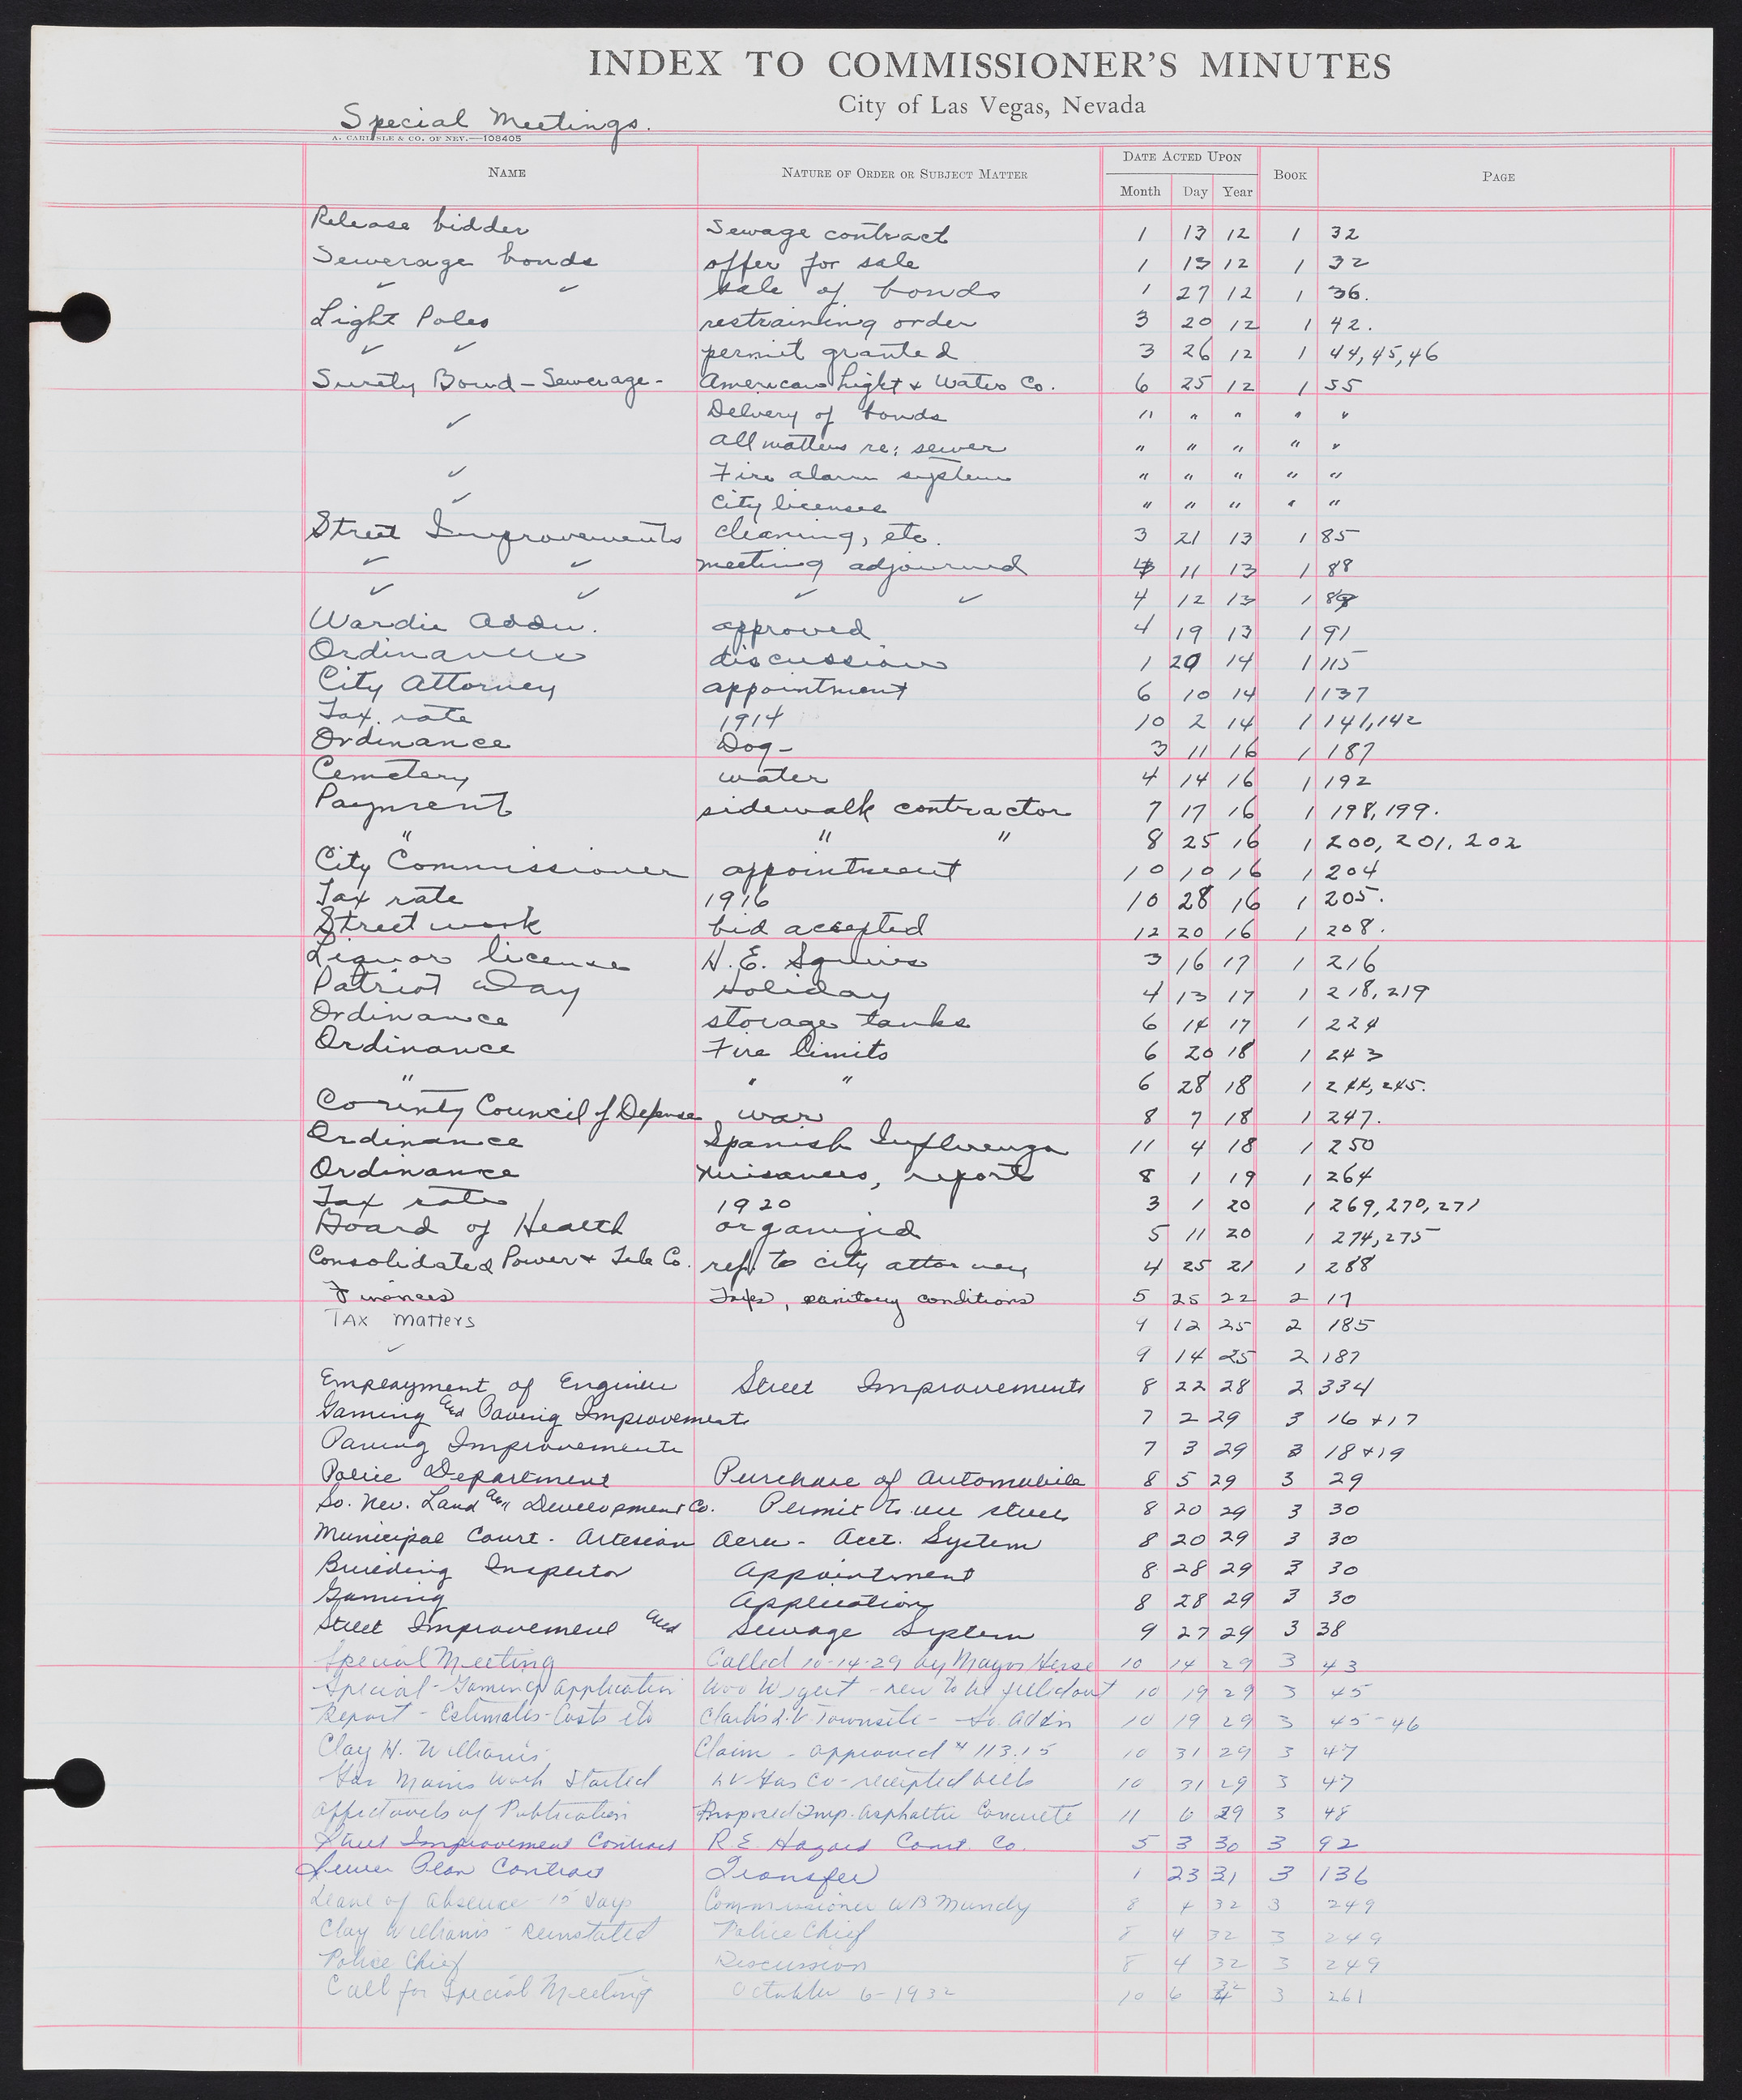 Las Vegas City Commission Minutes Index 1, 1911-1960: documents, item 285